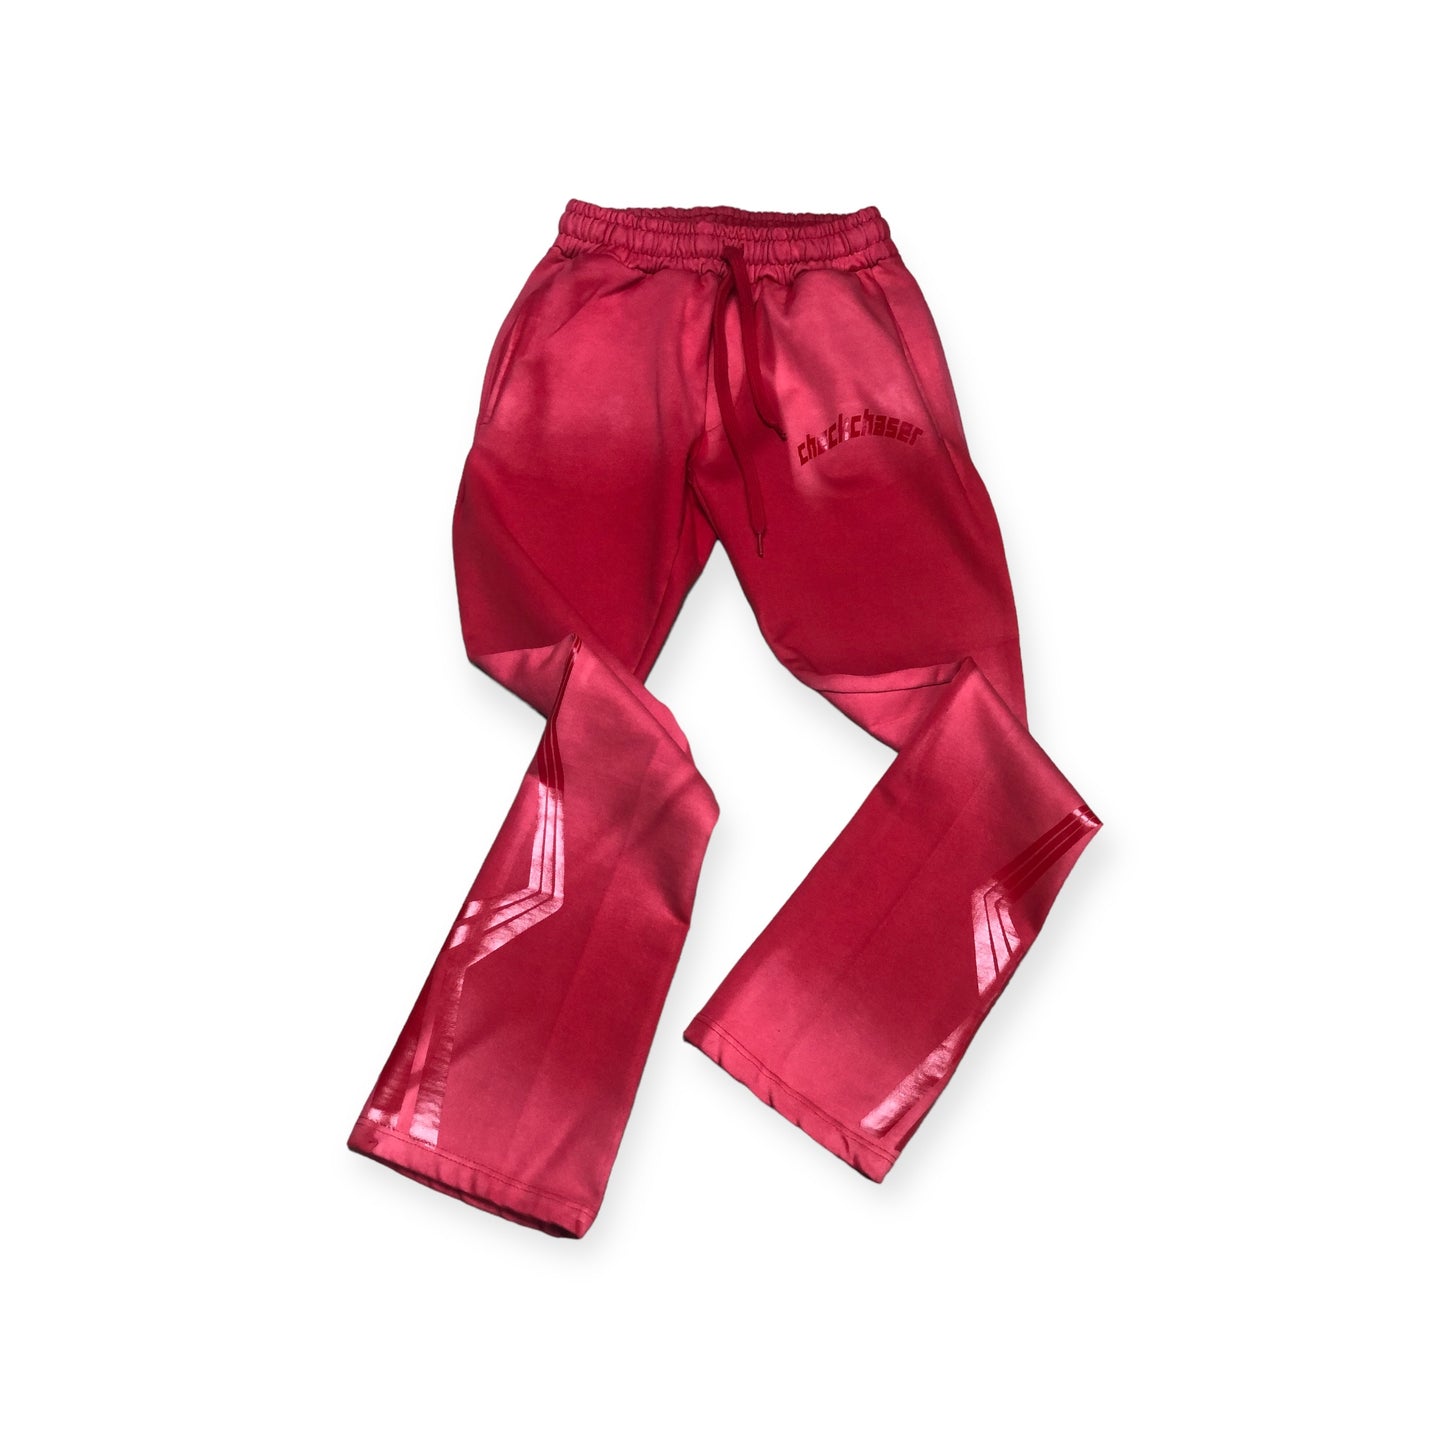 Checkchaser “Cherry red” Sweatsuit